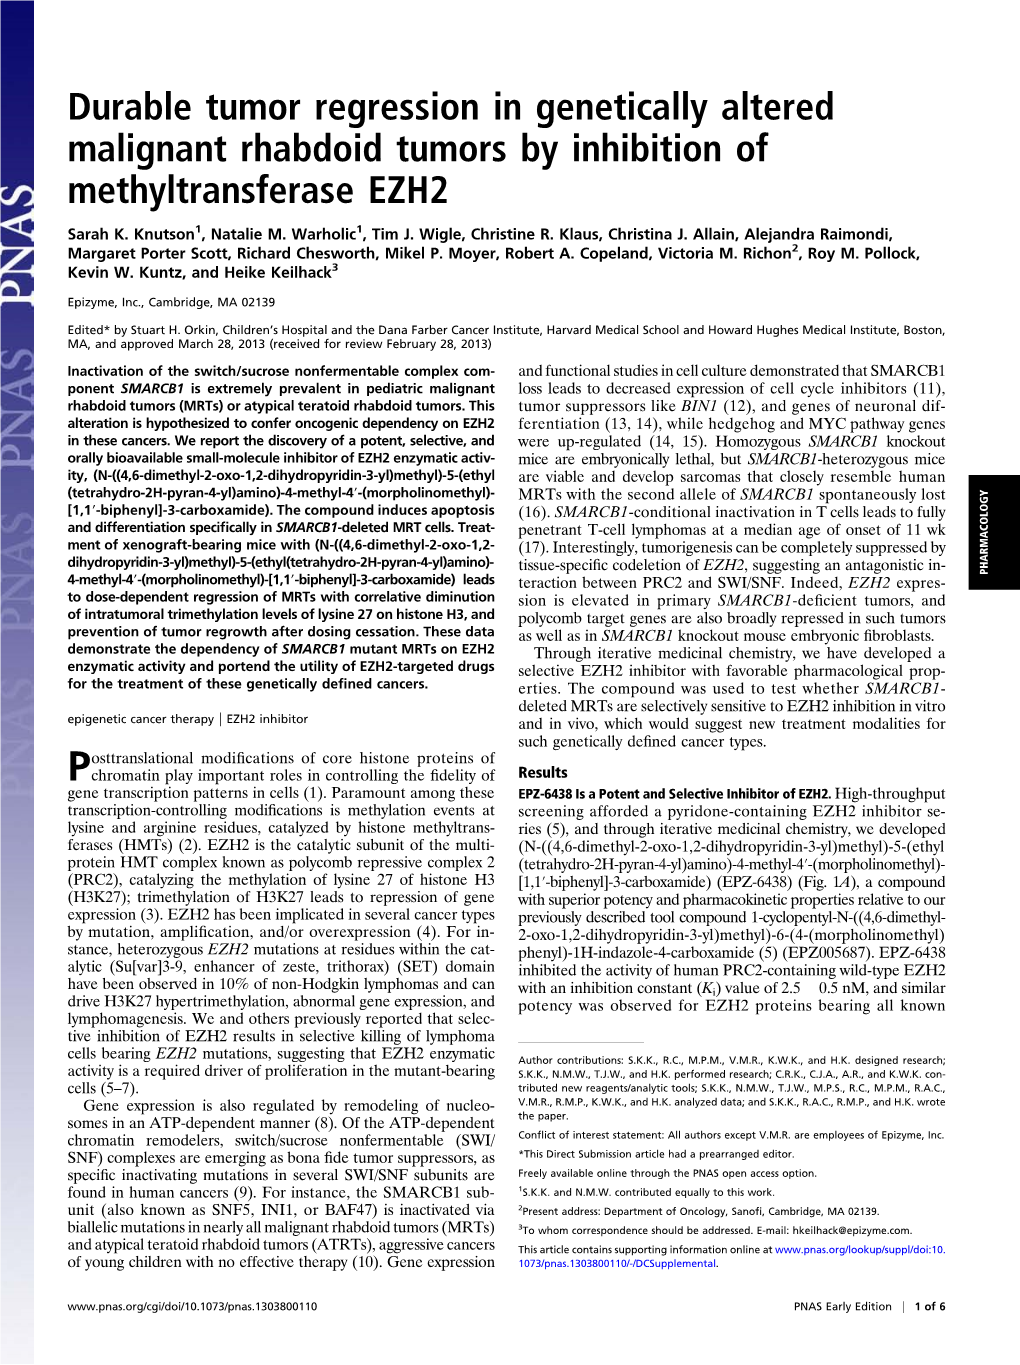 Durable Tumor Regression in Genetically Altered Malignant Rhabdoid Tumors by Inhibition of Methyltransferase EZH2